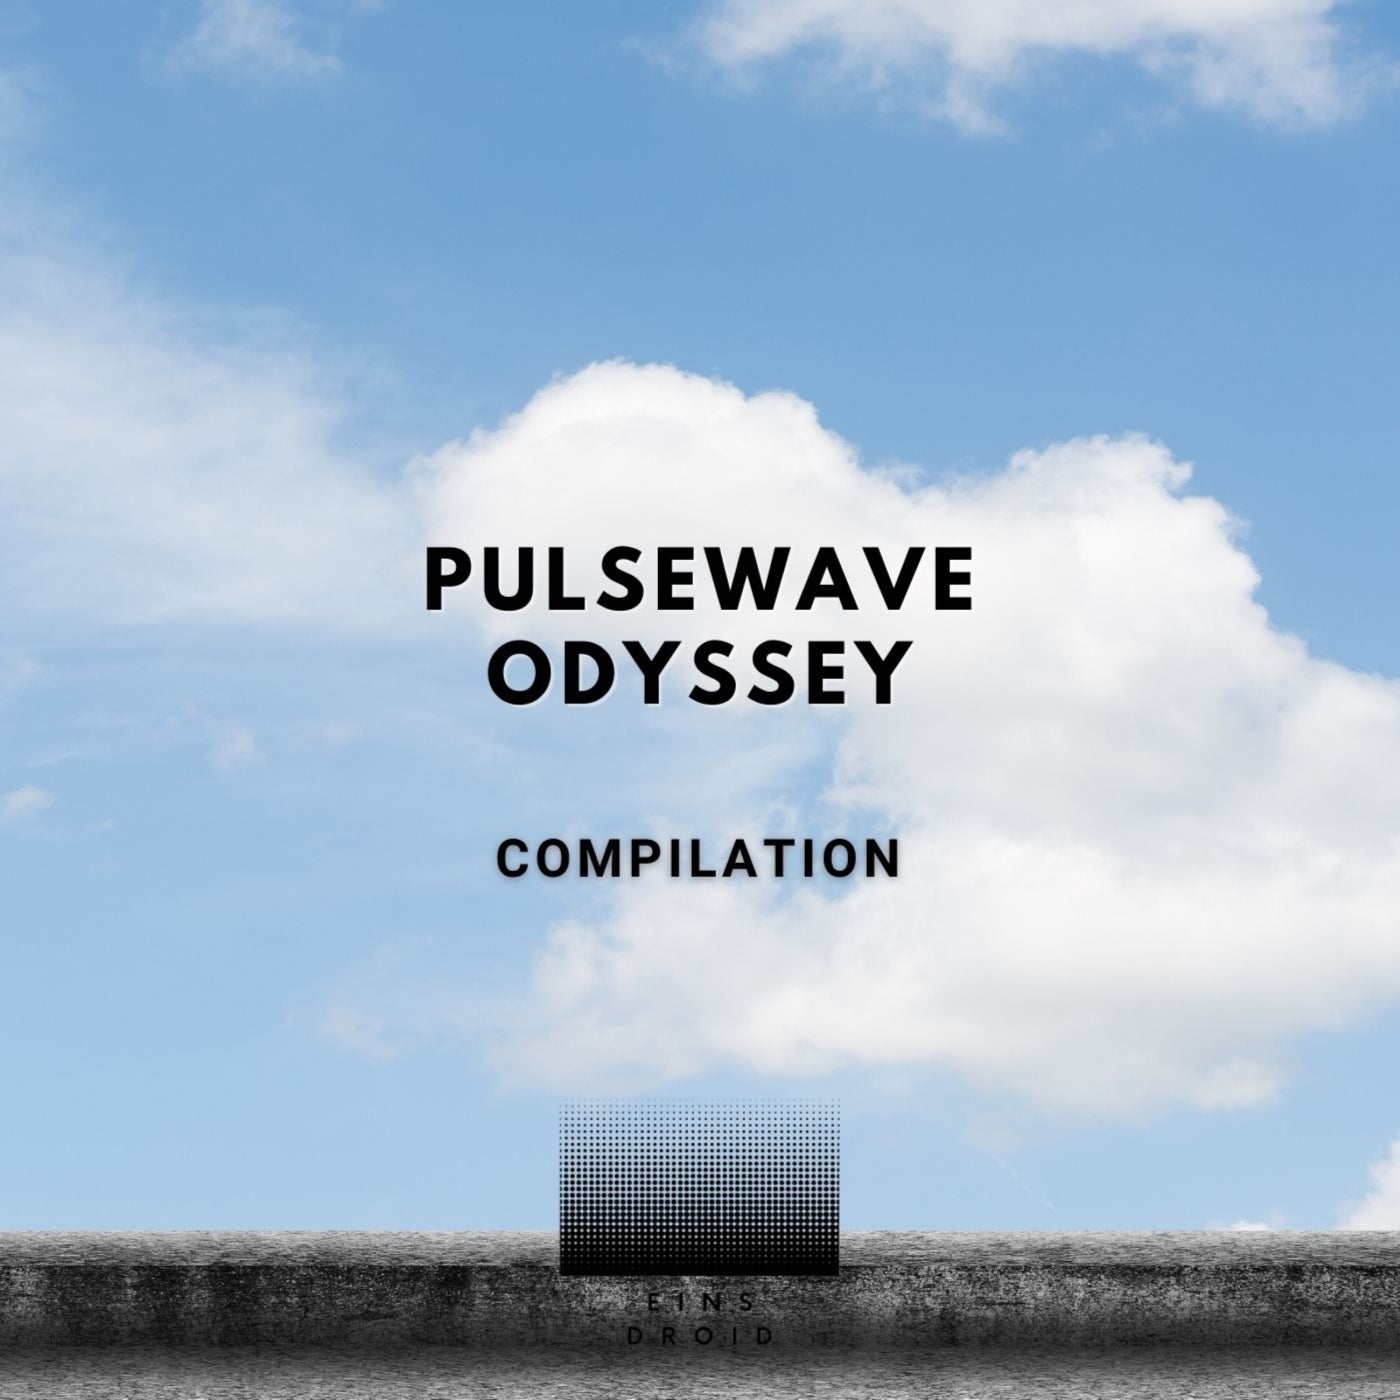 Pulsewave Odyssey